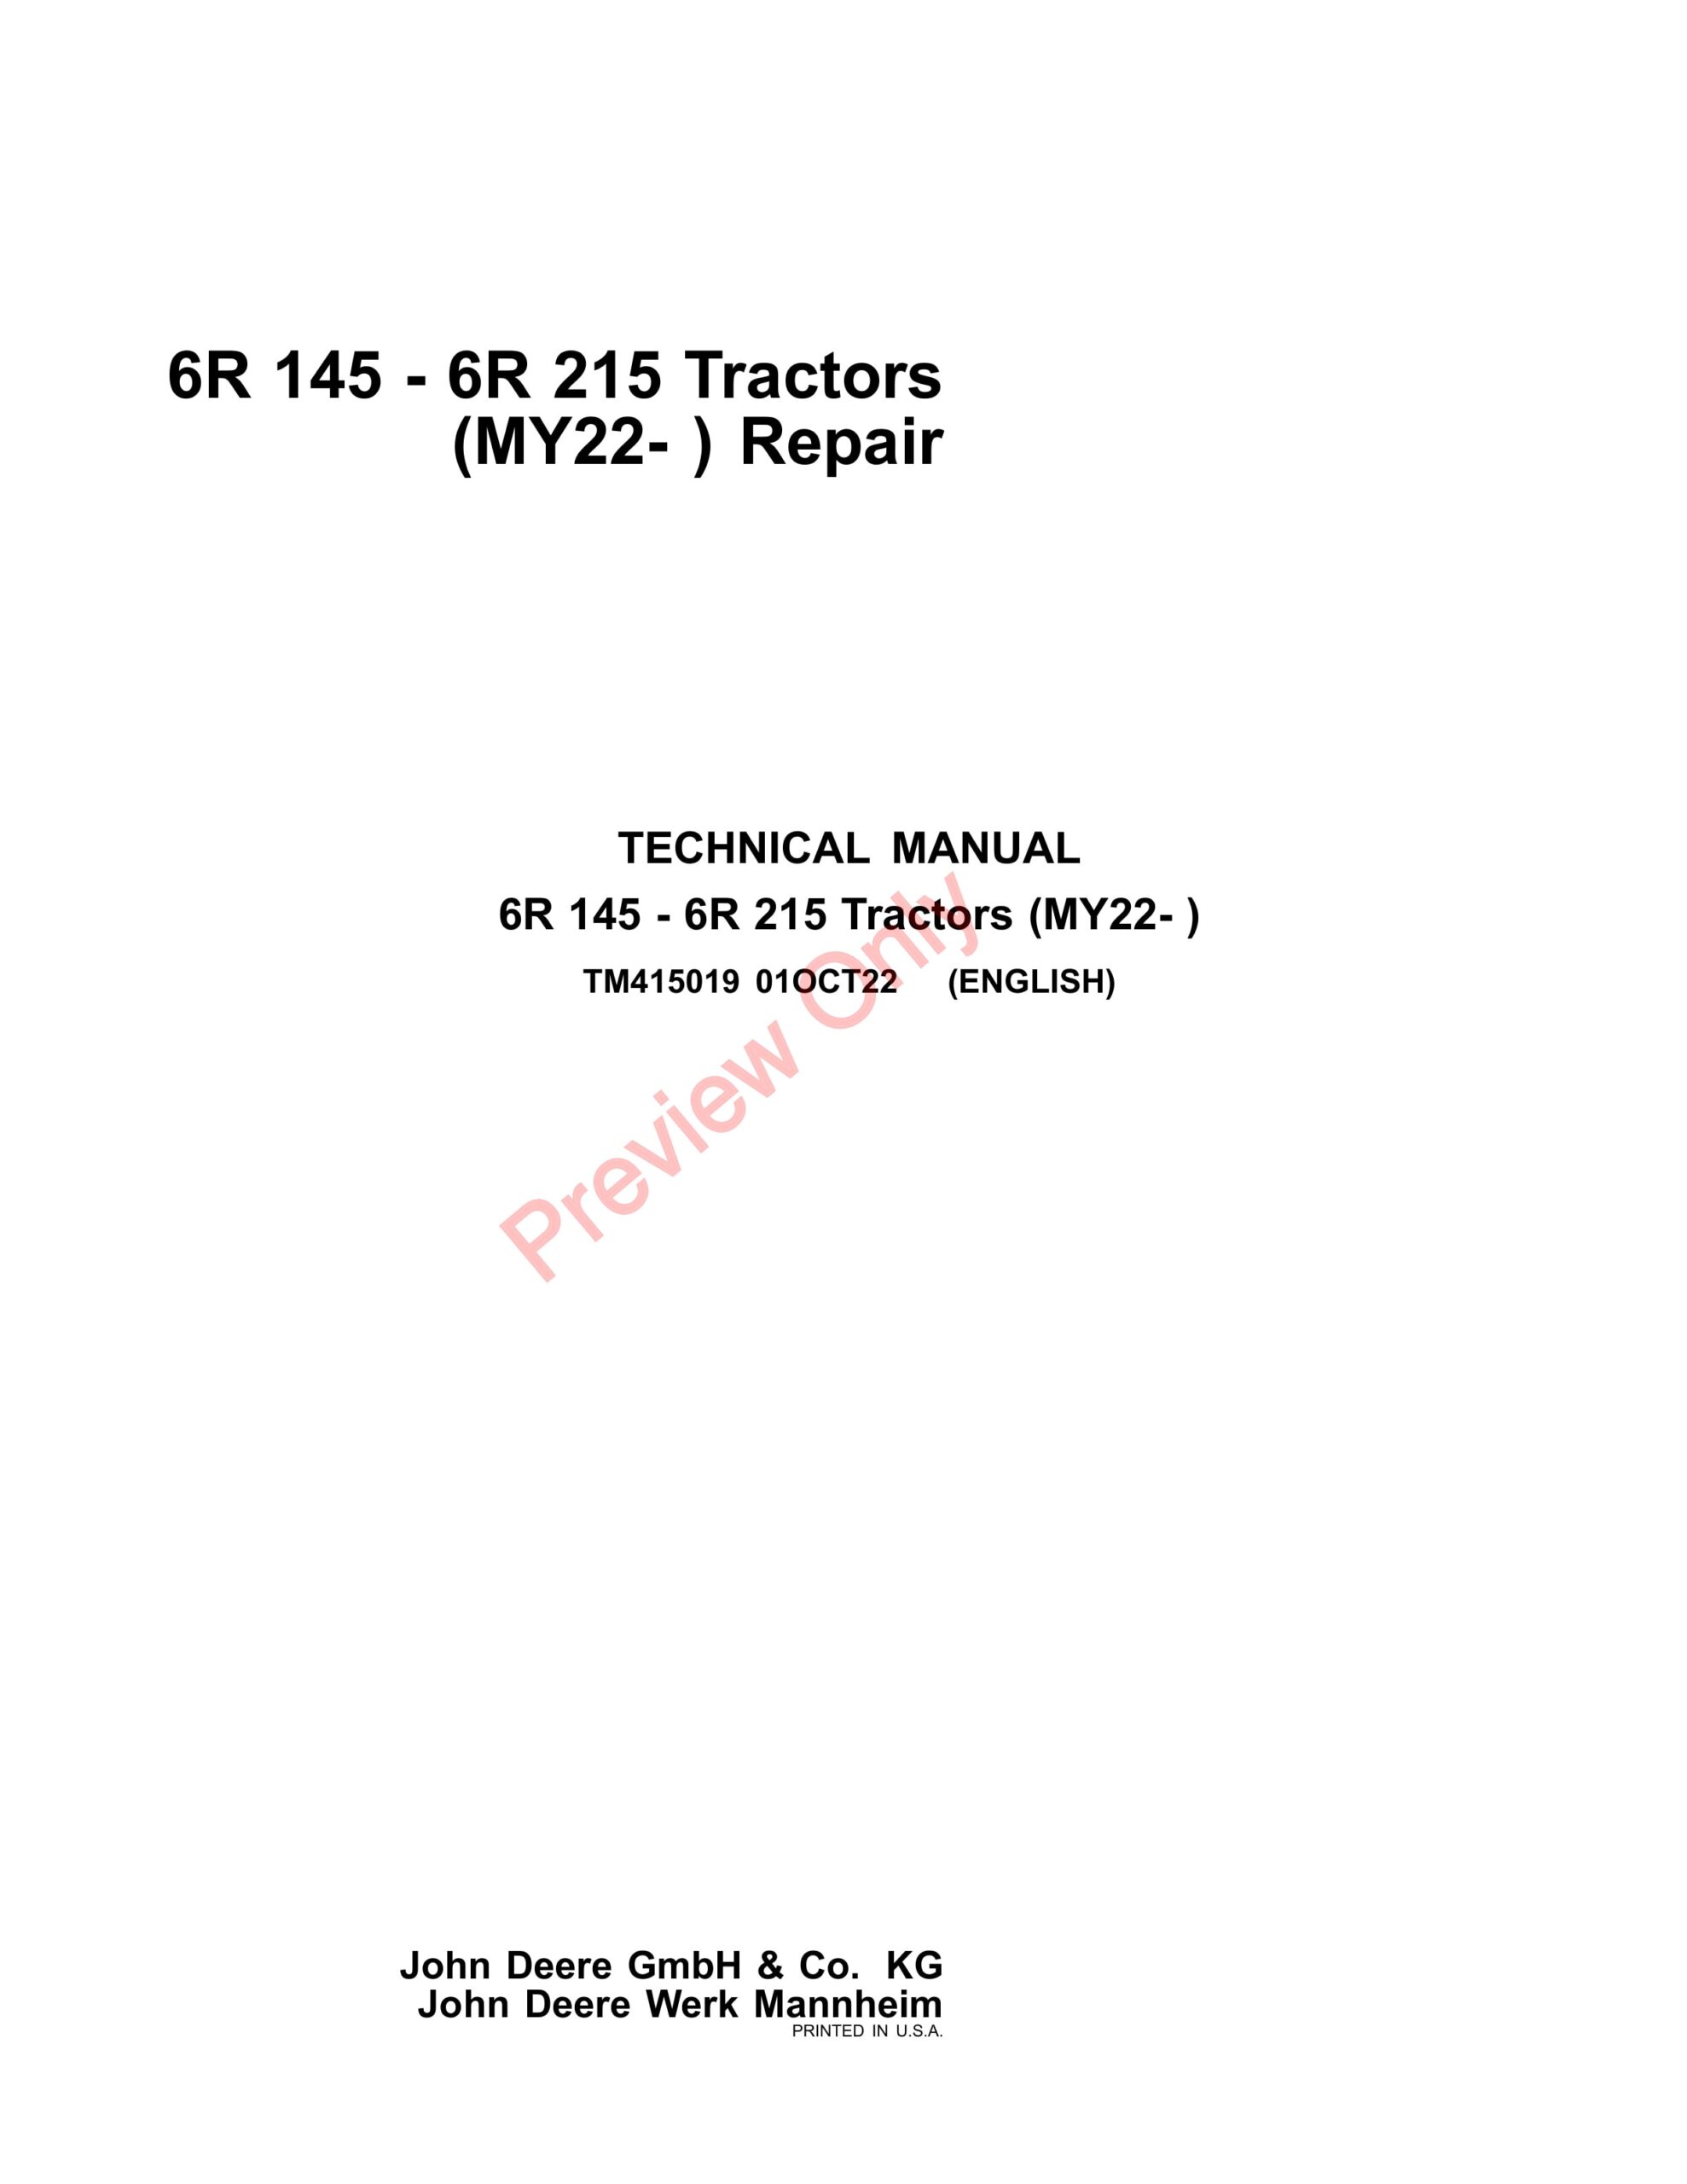 John Deere 6R 145 – 6R 215 Tractors (MY22- ) Technical Manual TM415019 01MAR23-1